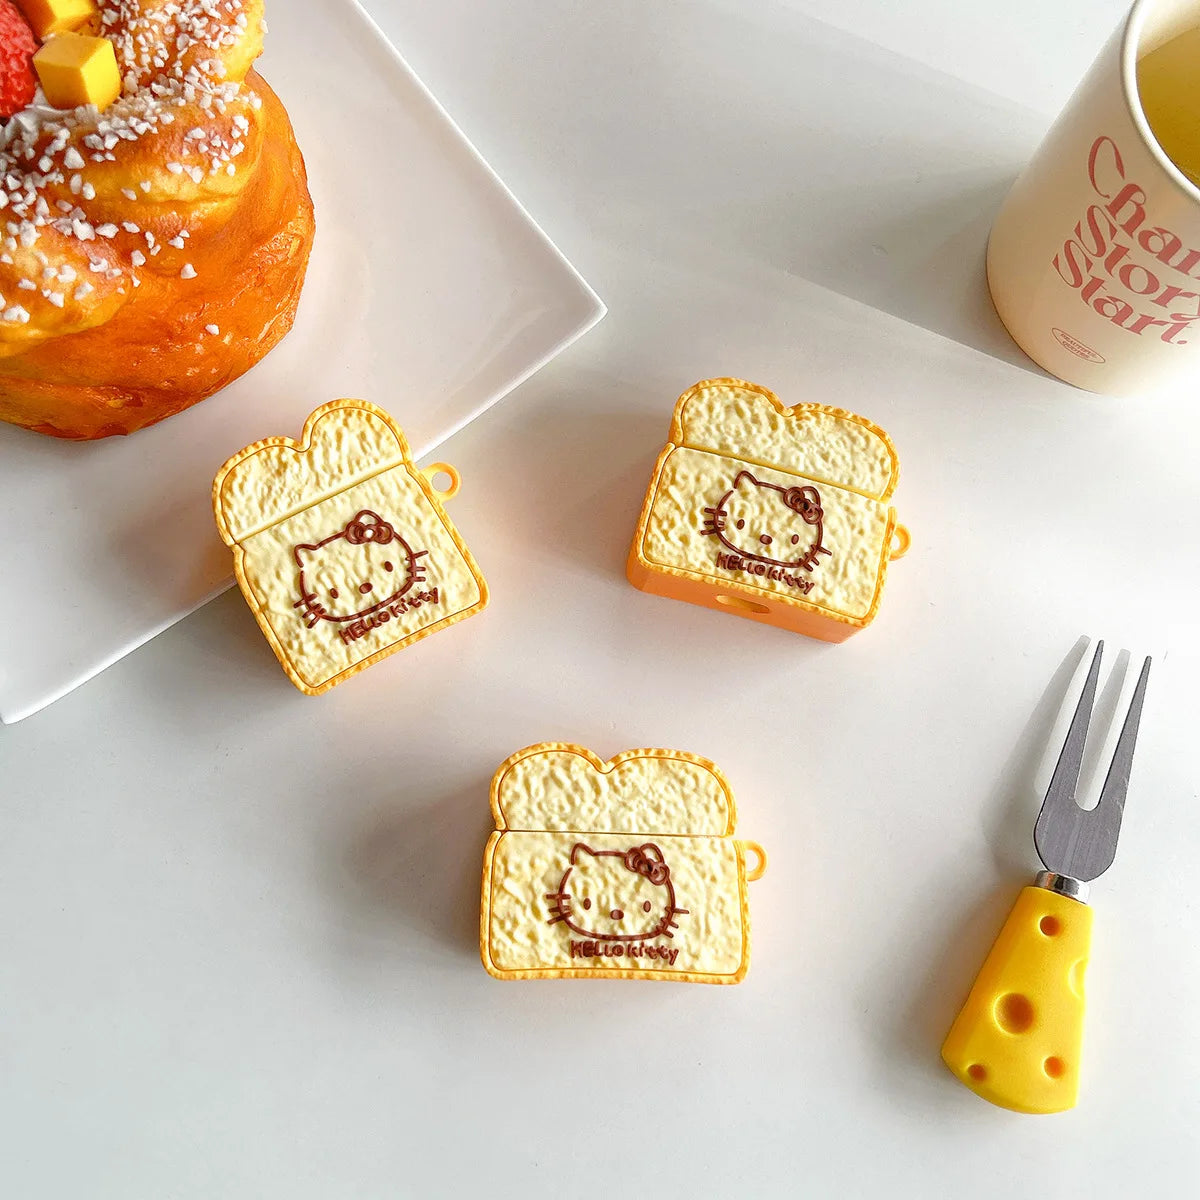 Hello Kitty Bread Toast Airpods Case